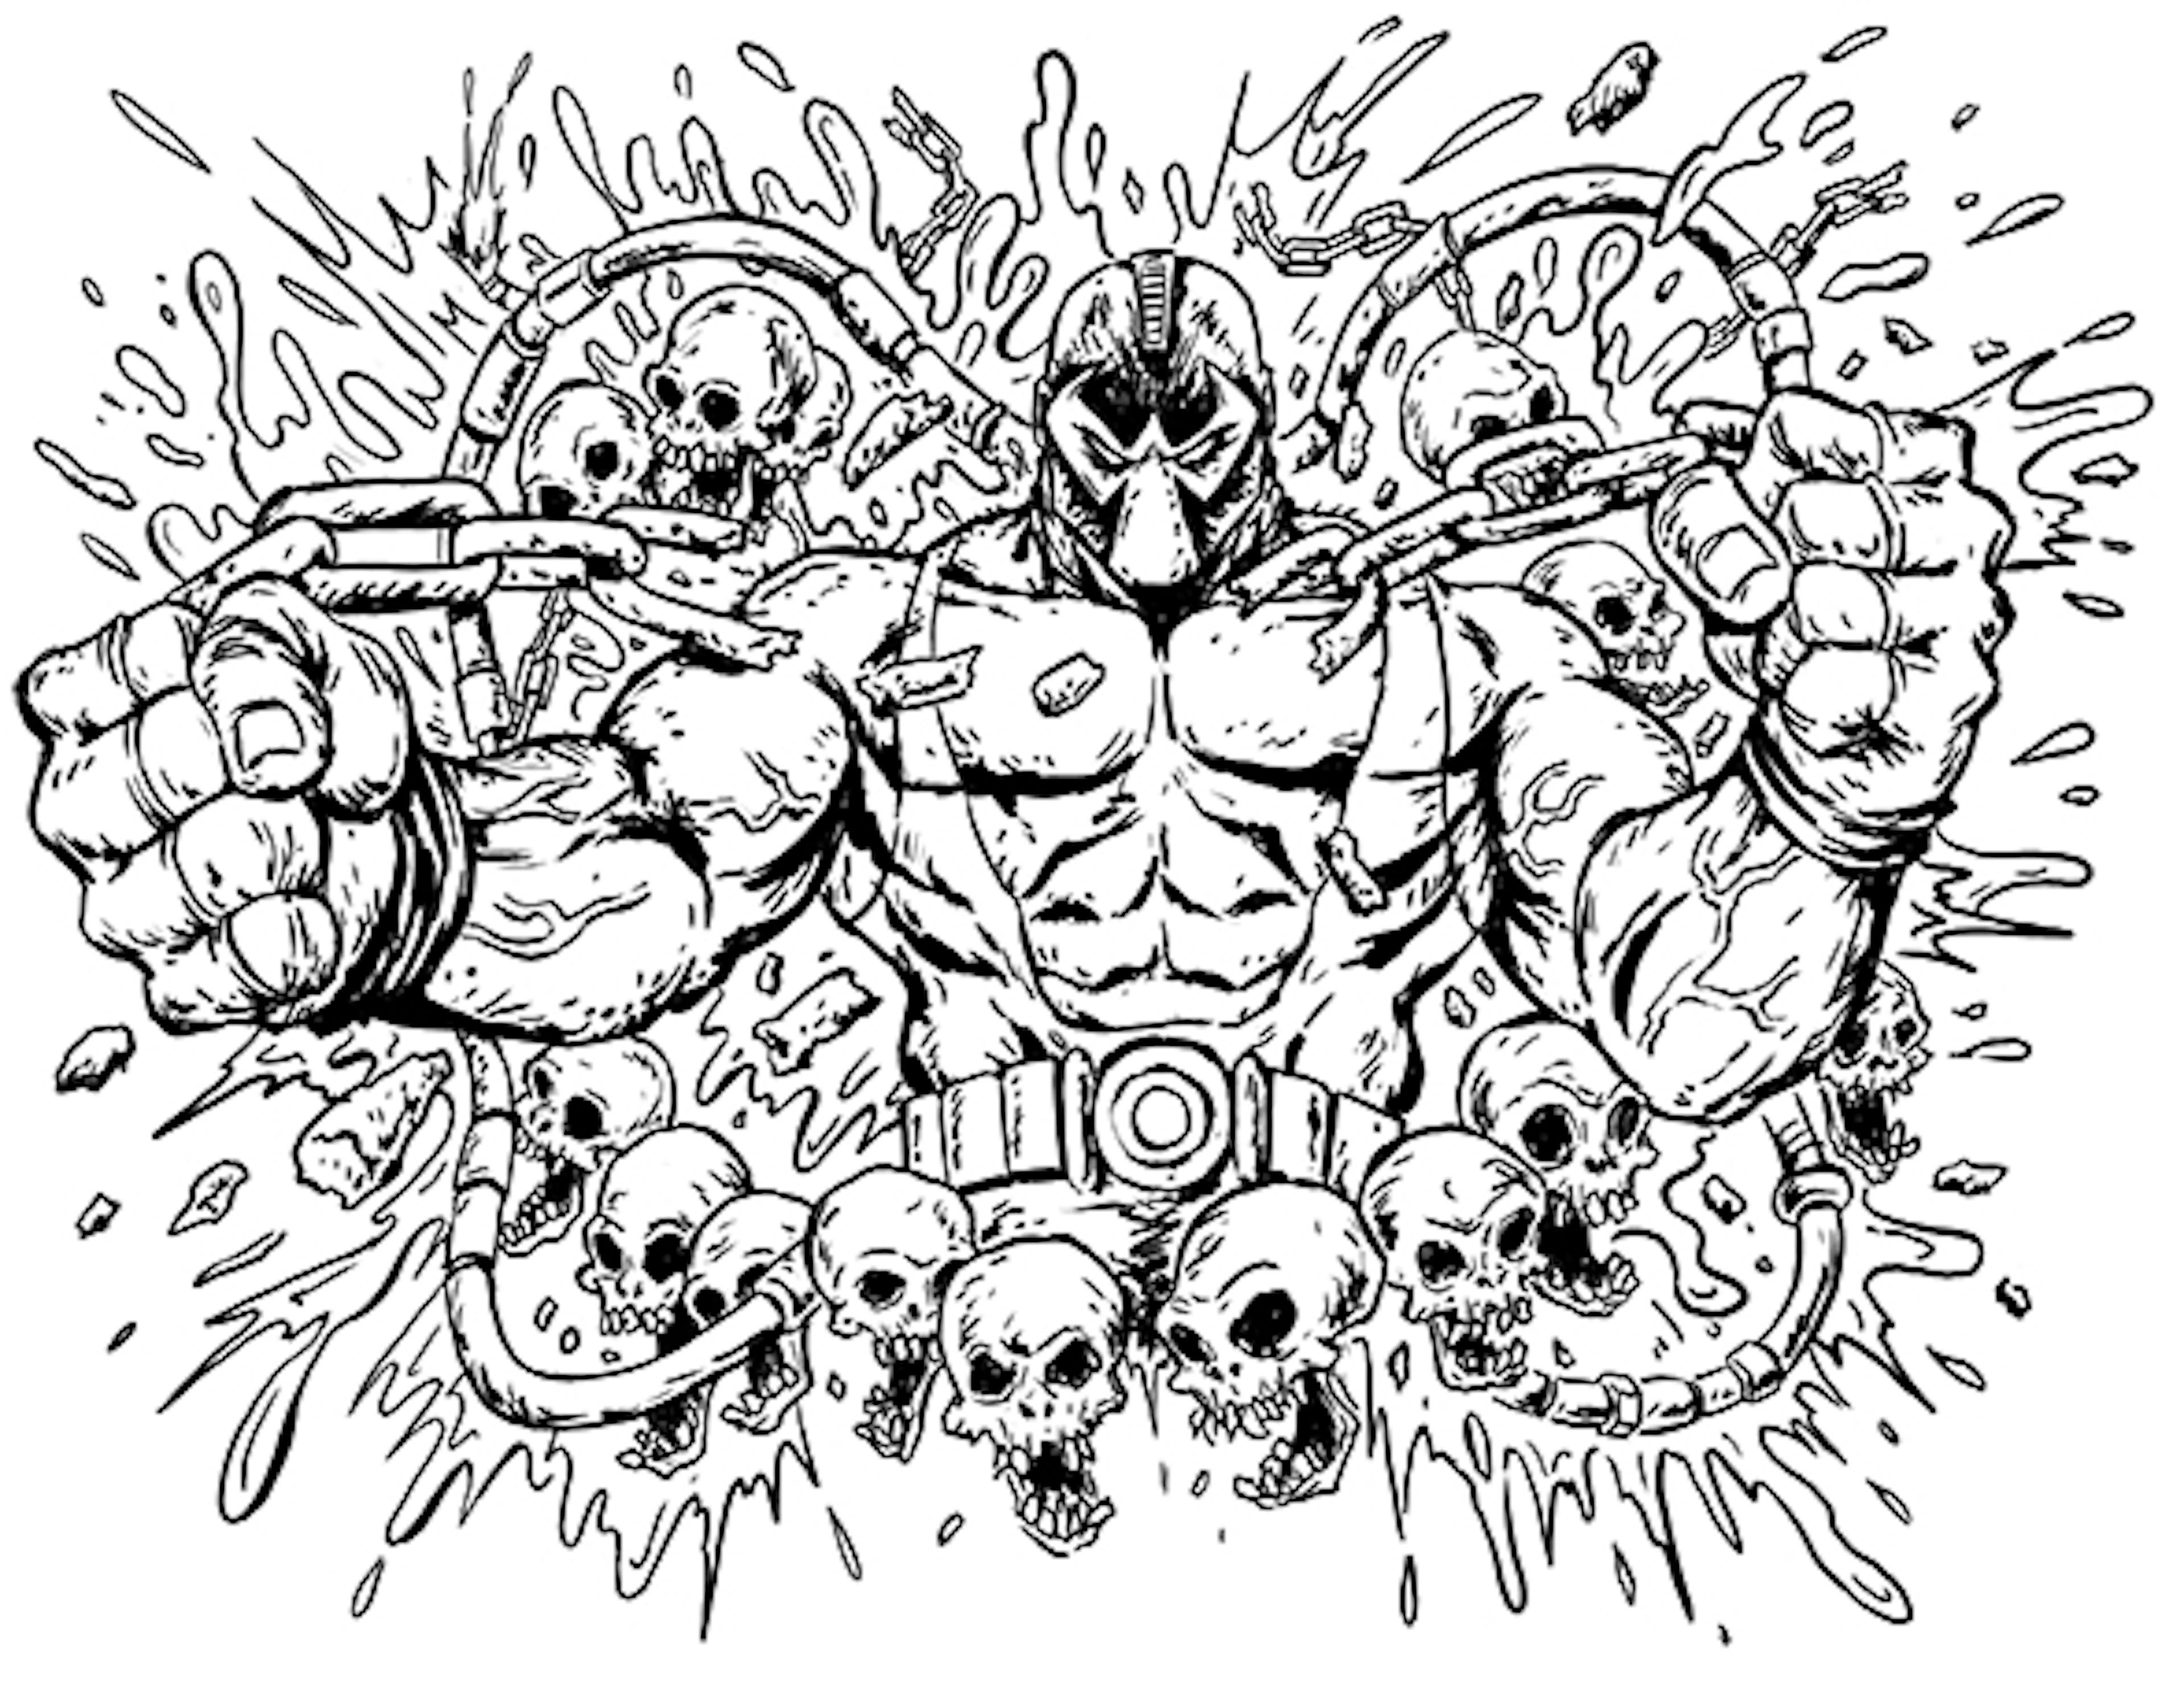 An illustration of Bane